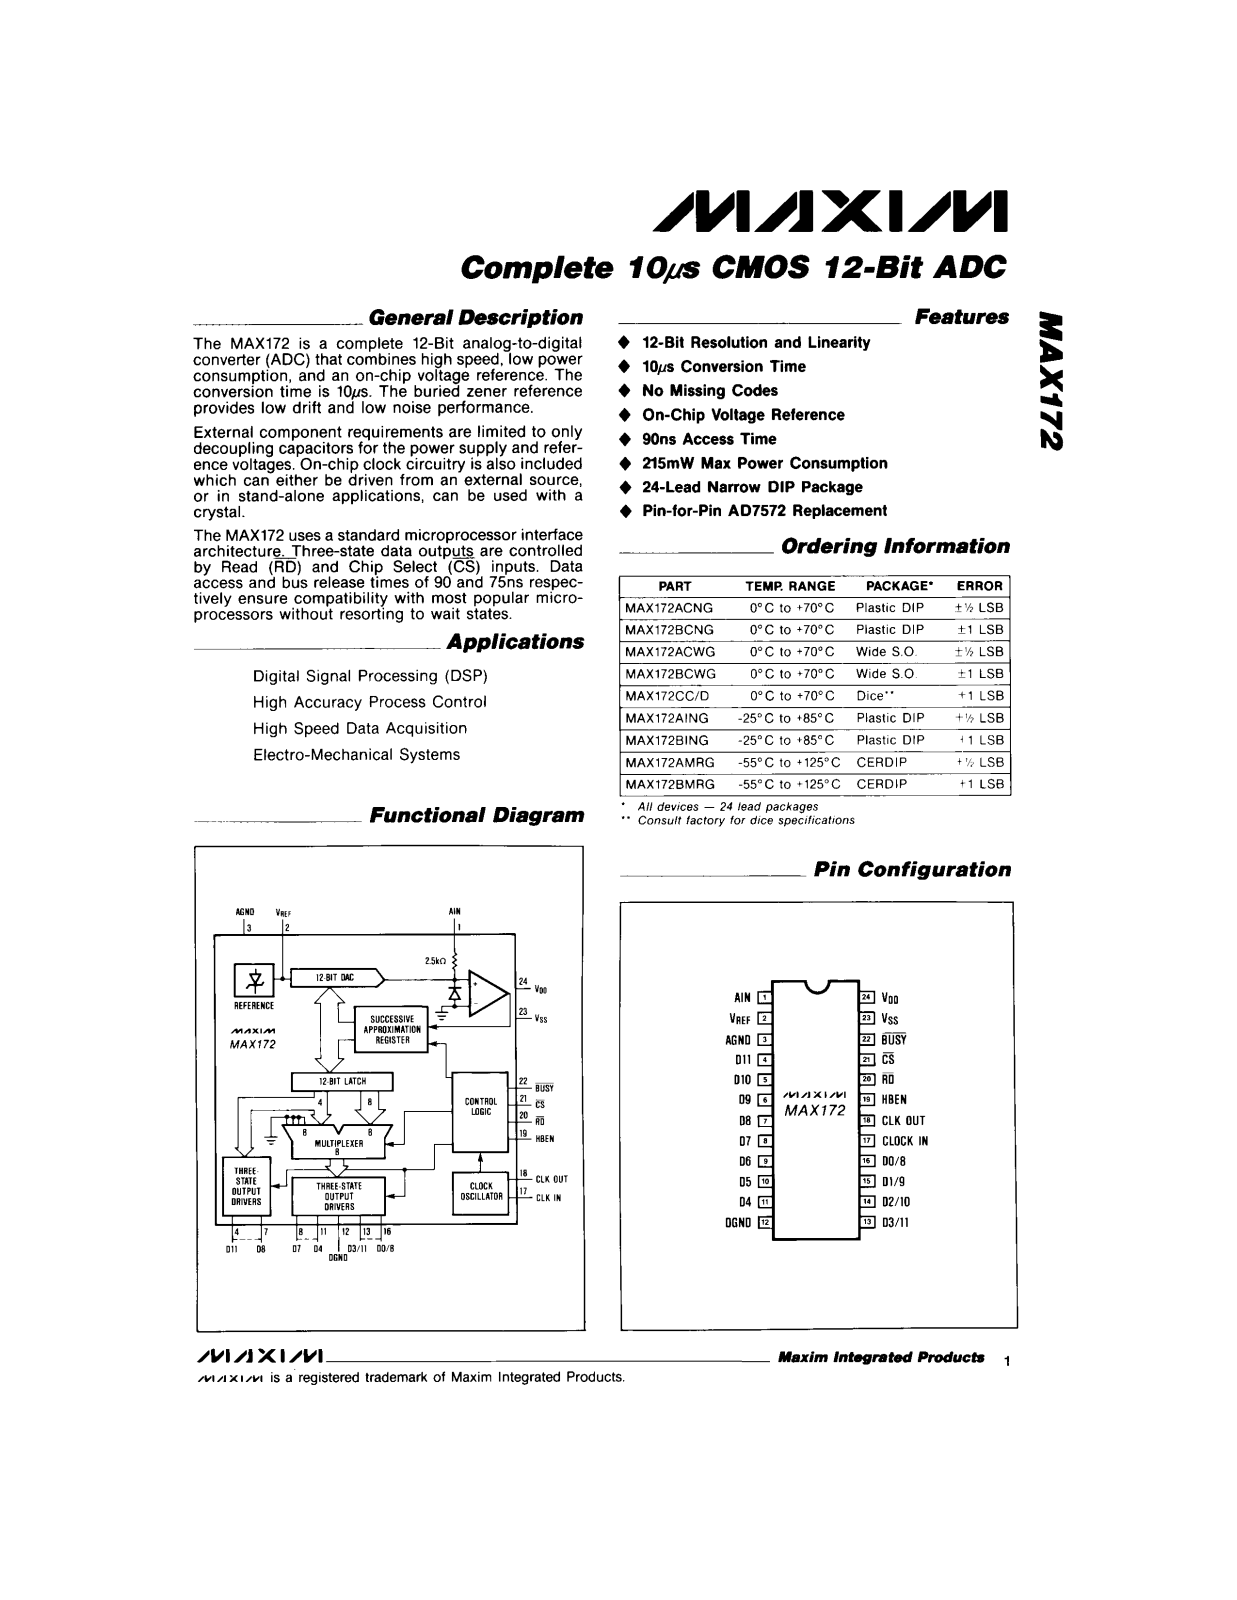 Maxim MAX172CC-D, MAX172BMRG, MAX172BCWG, MAX172BCNG, MAX172AMRG Datasheet